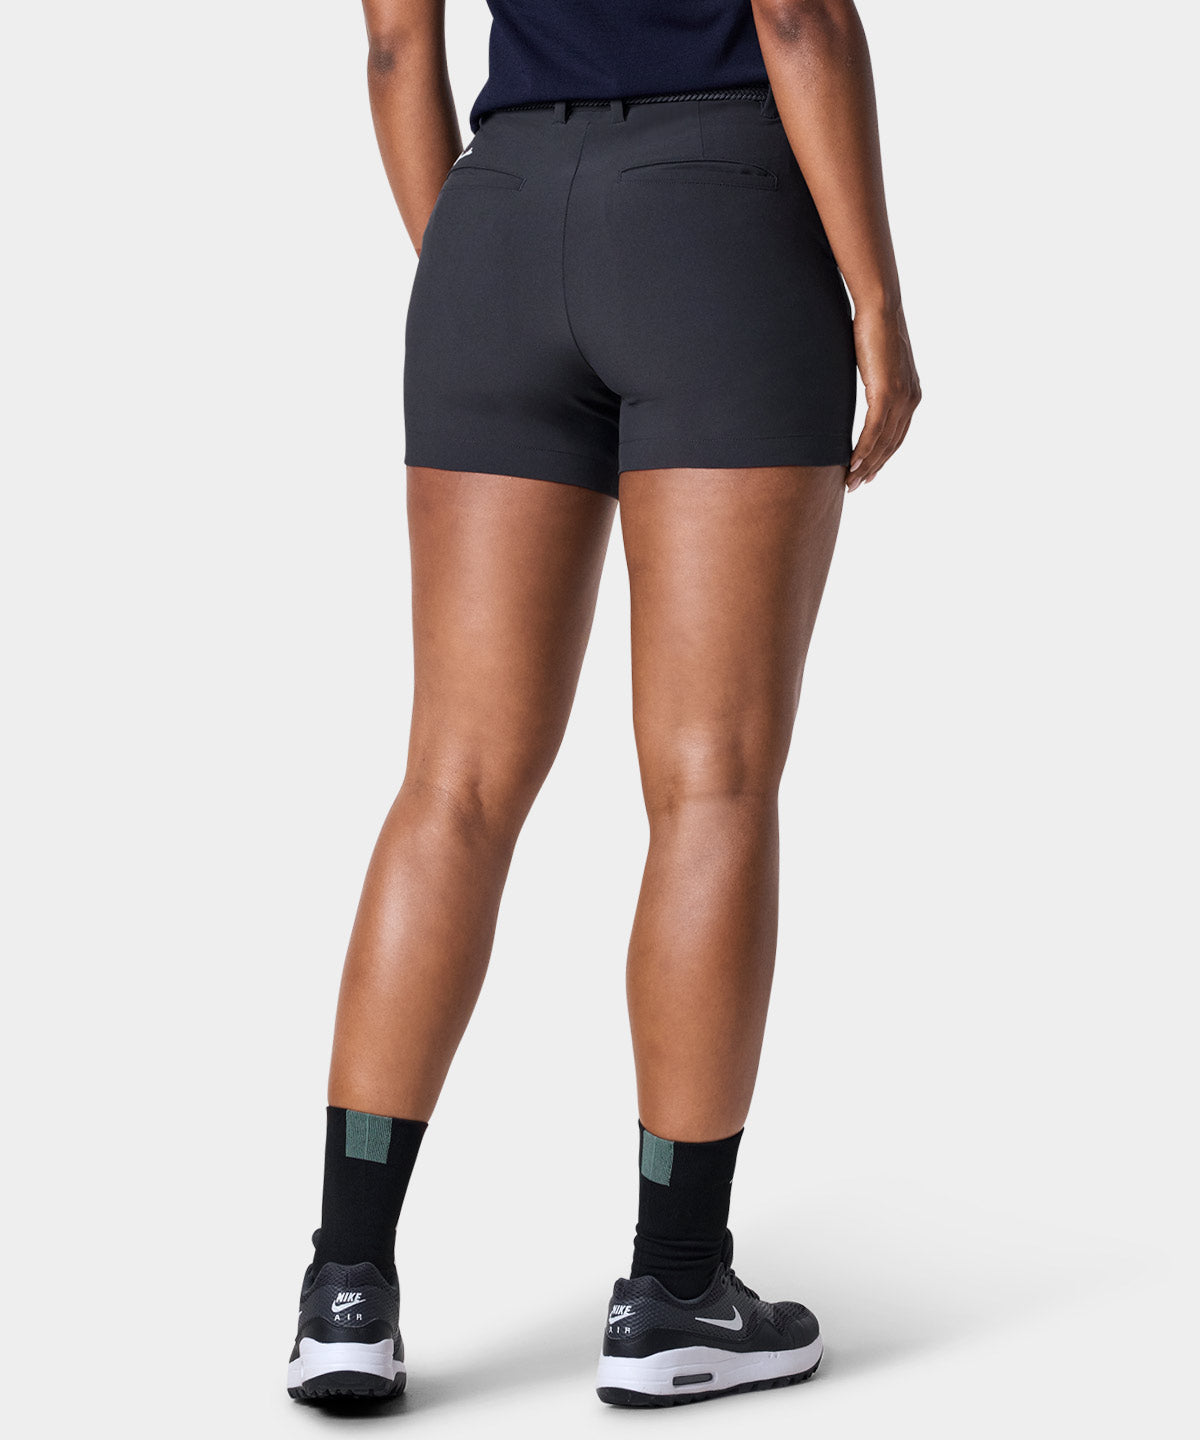 Women's Heather Grey 3 Compression Shorts